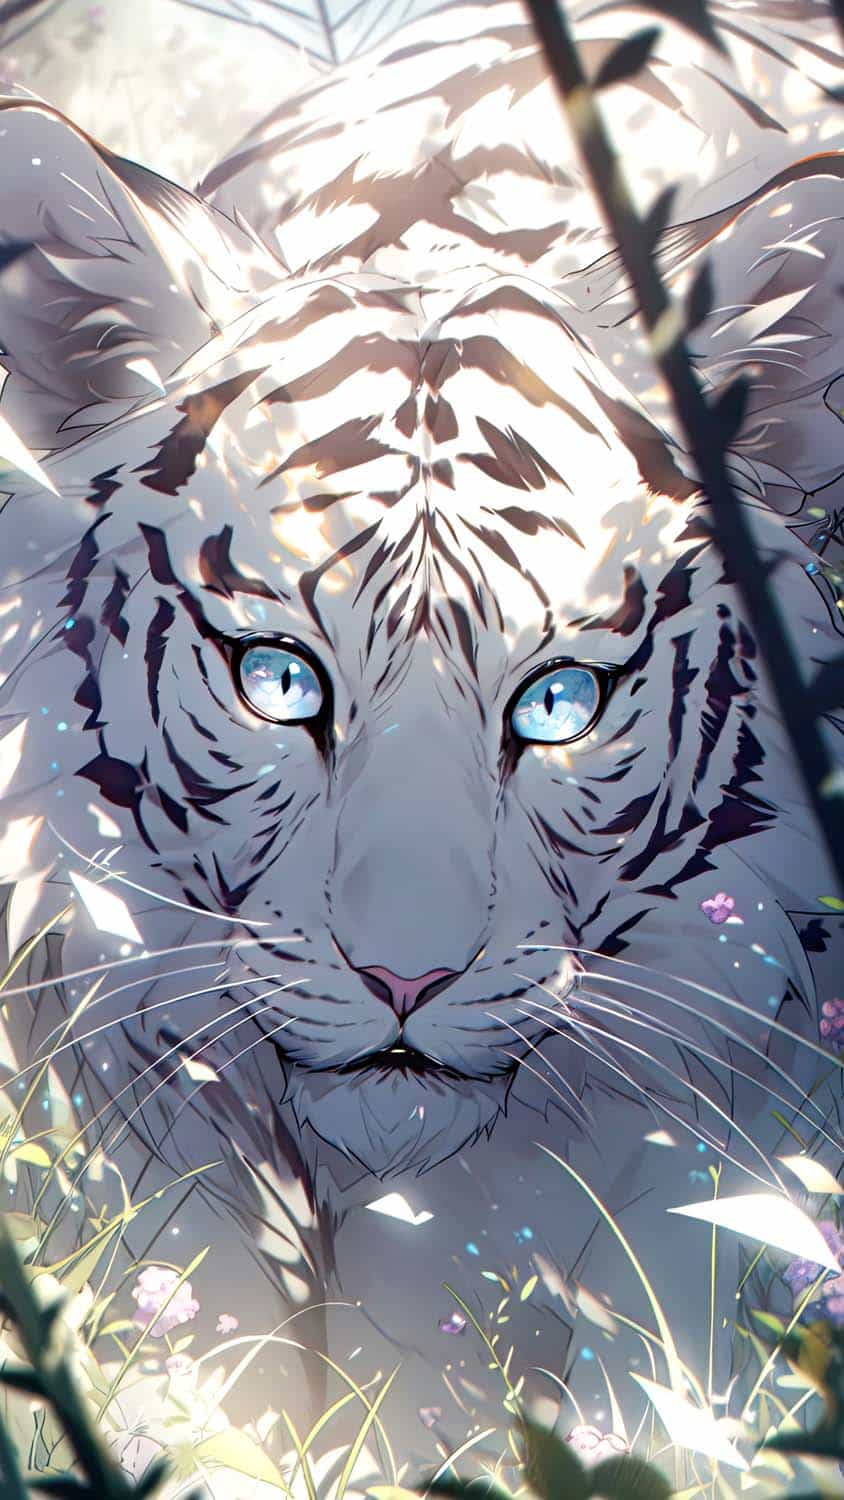 QIMEN: I AM… THE WHITE TIGER - The Hidden Sun